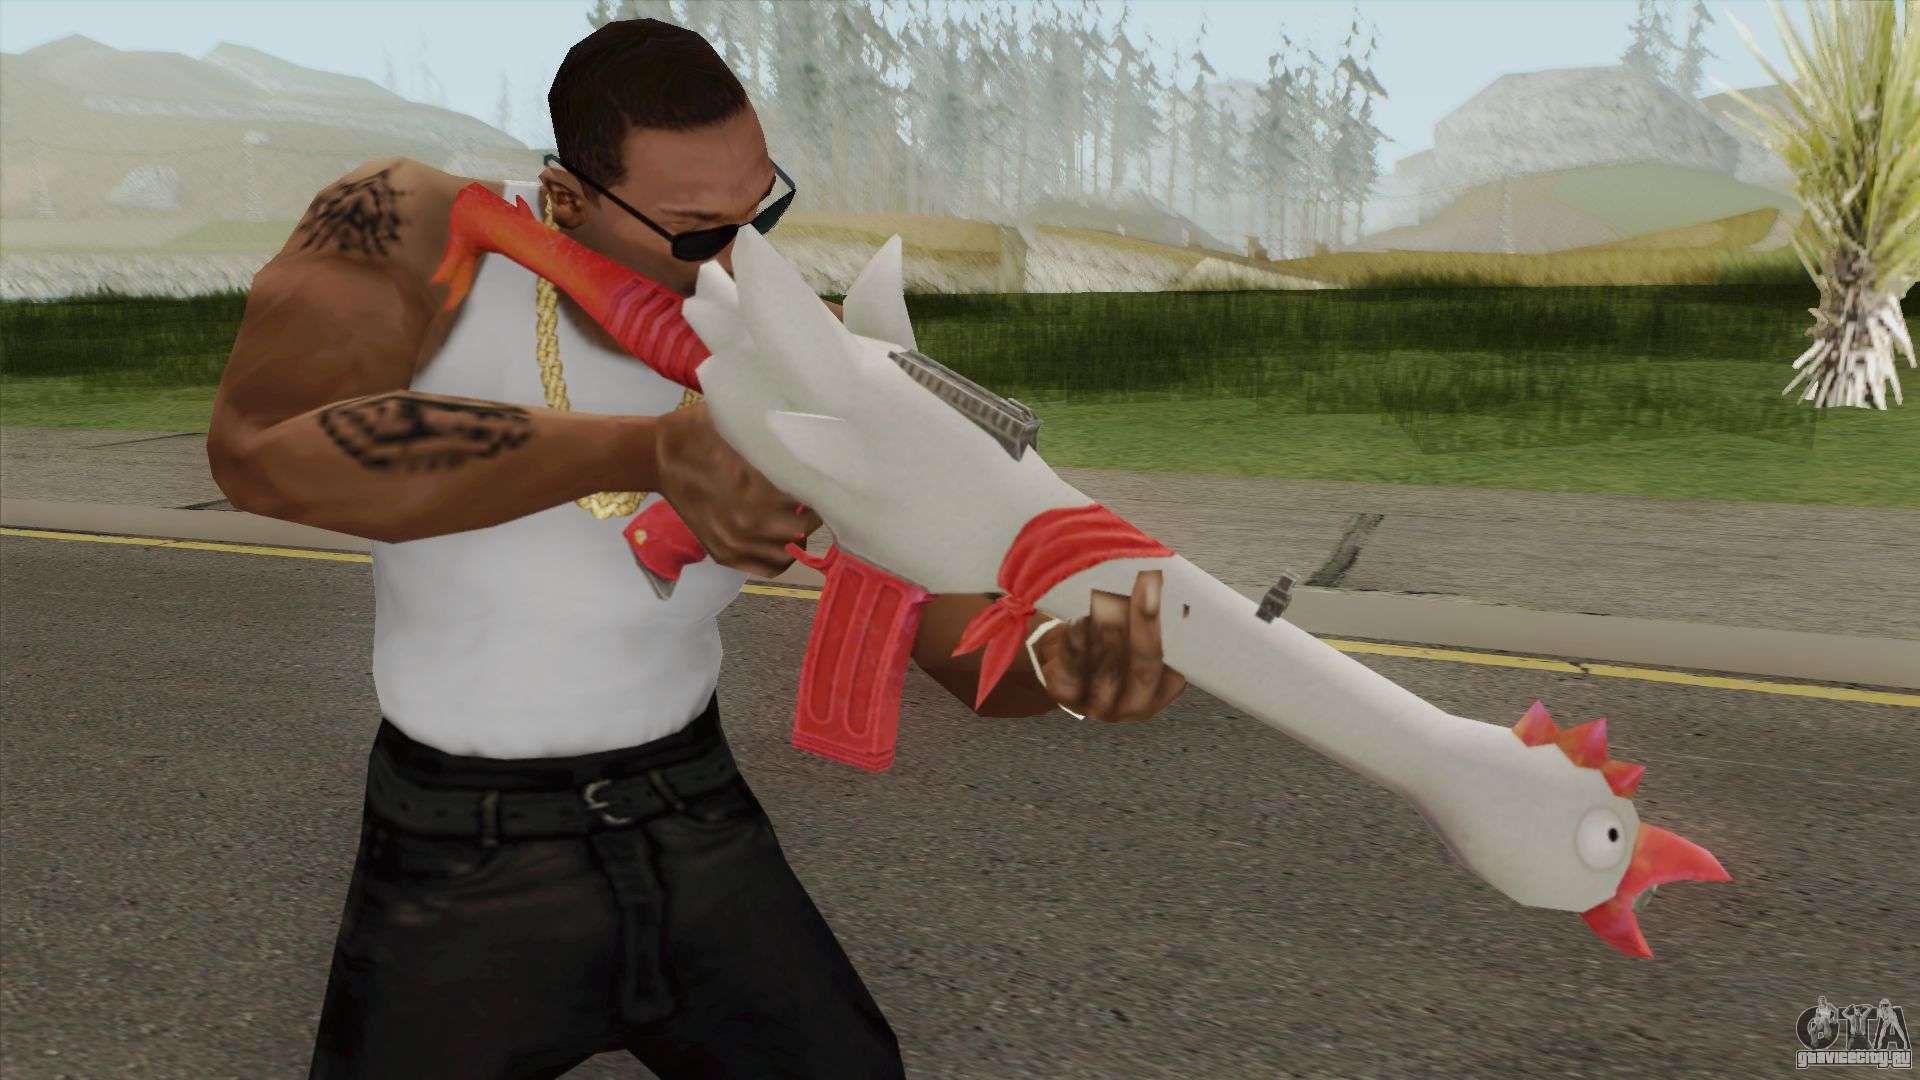 Rules of Survival Rubber Chicken Gun для GTA San Andreas